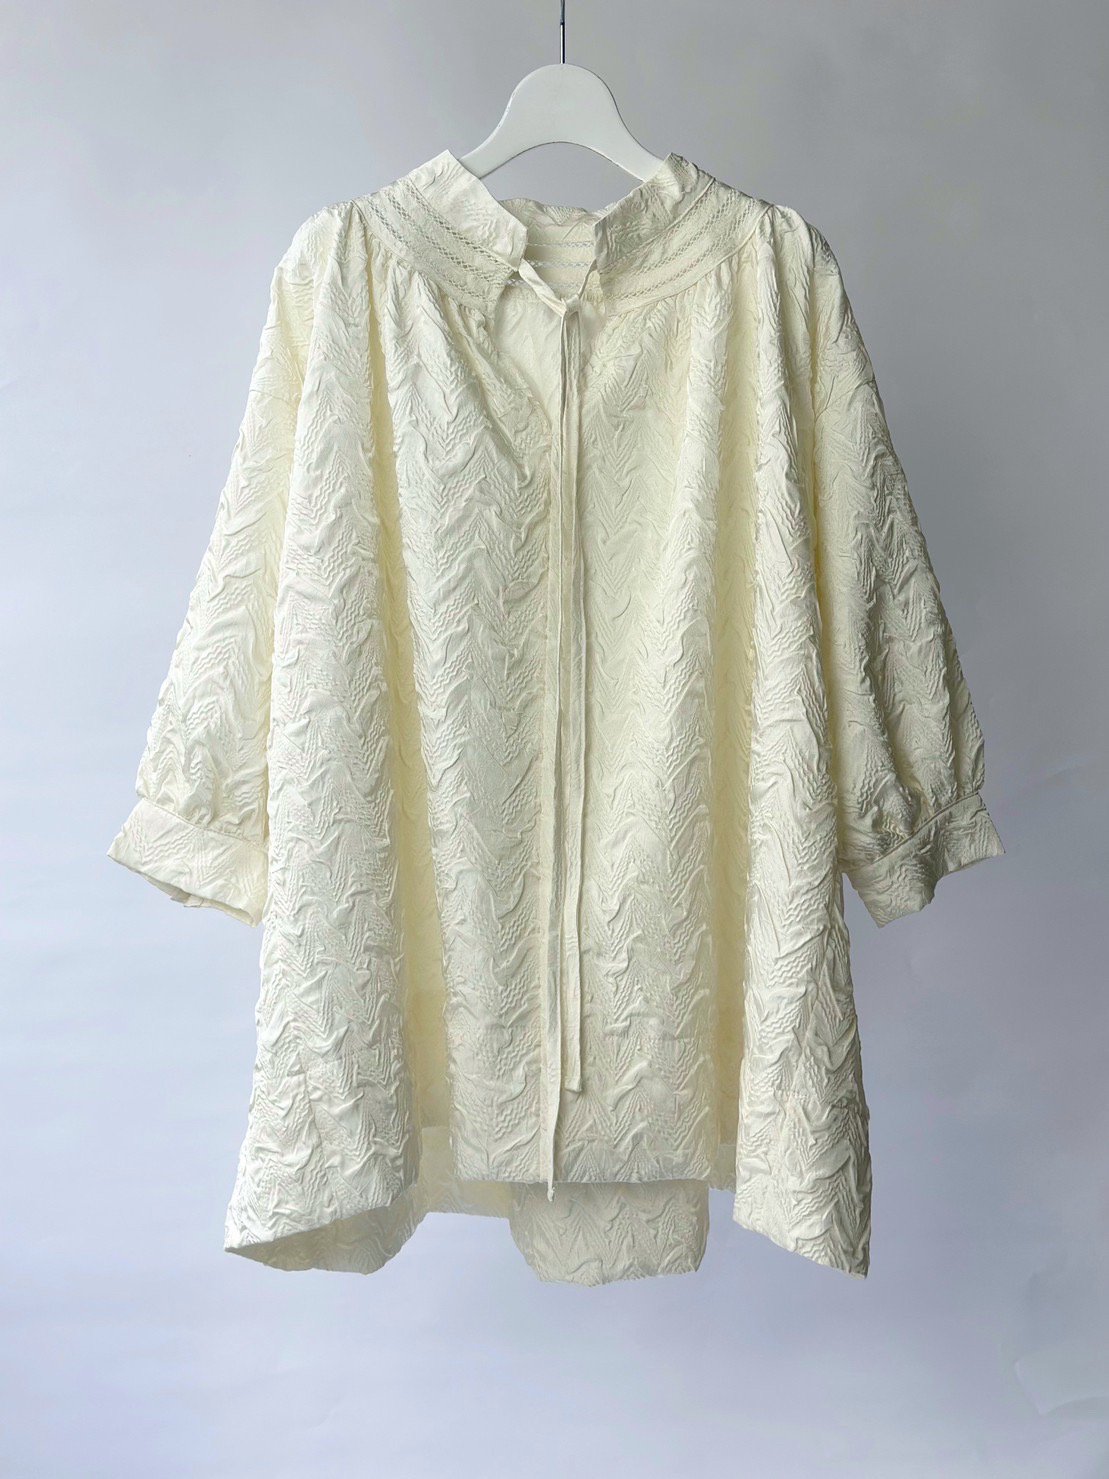 Jacquard high neck blouse / off white